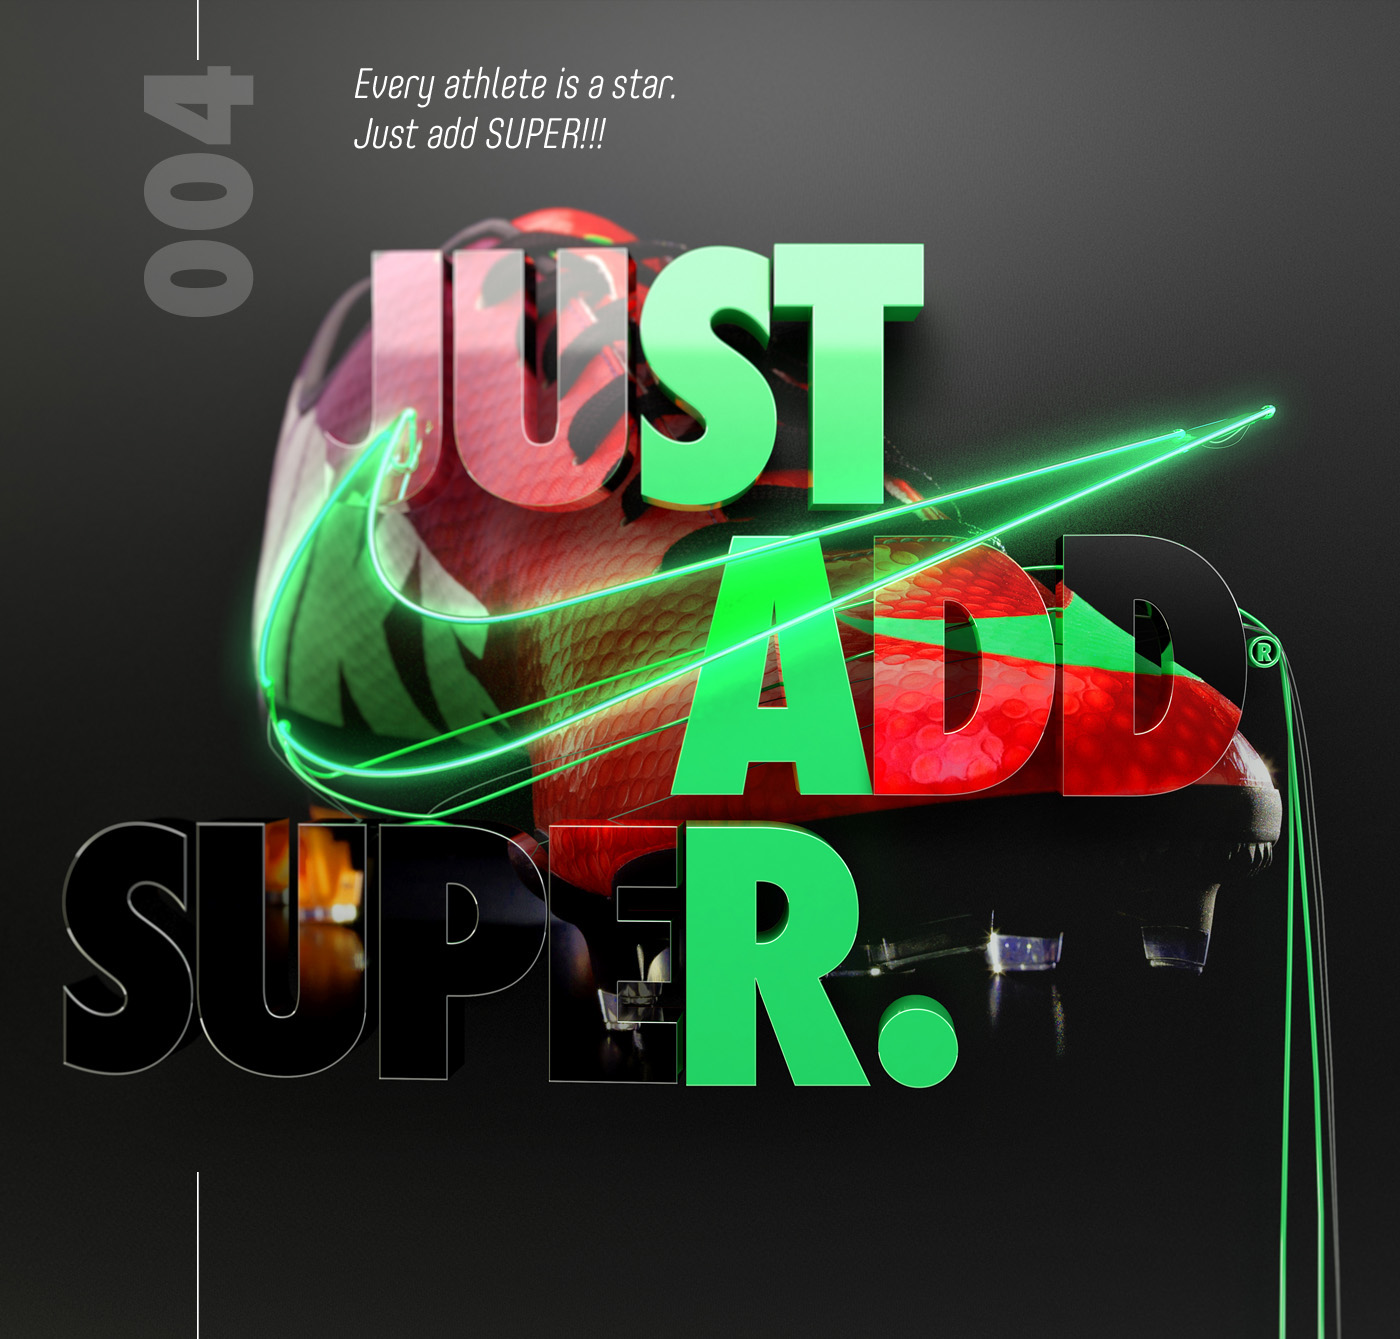 Nike sports Nike Shoes shoes soccer sportwear neon 3D type 3D Type colour